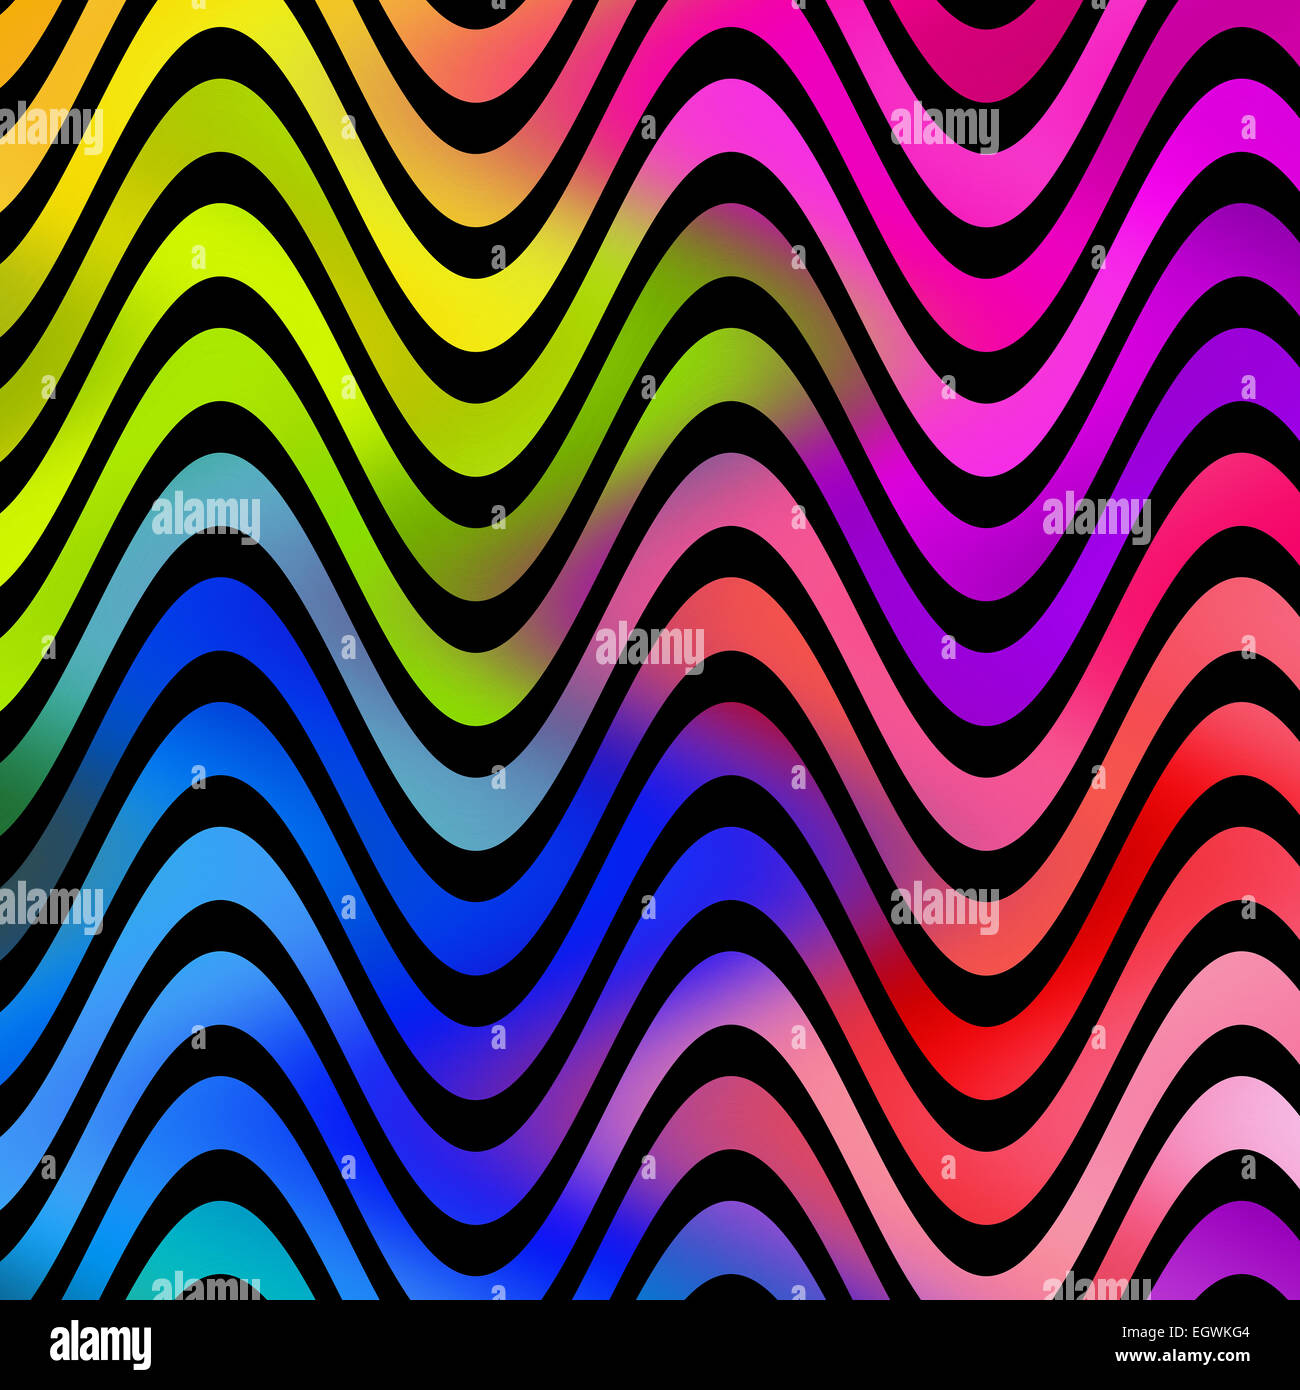 Multicoloured graduated wave pattern illustration. Stock Photo